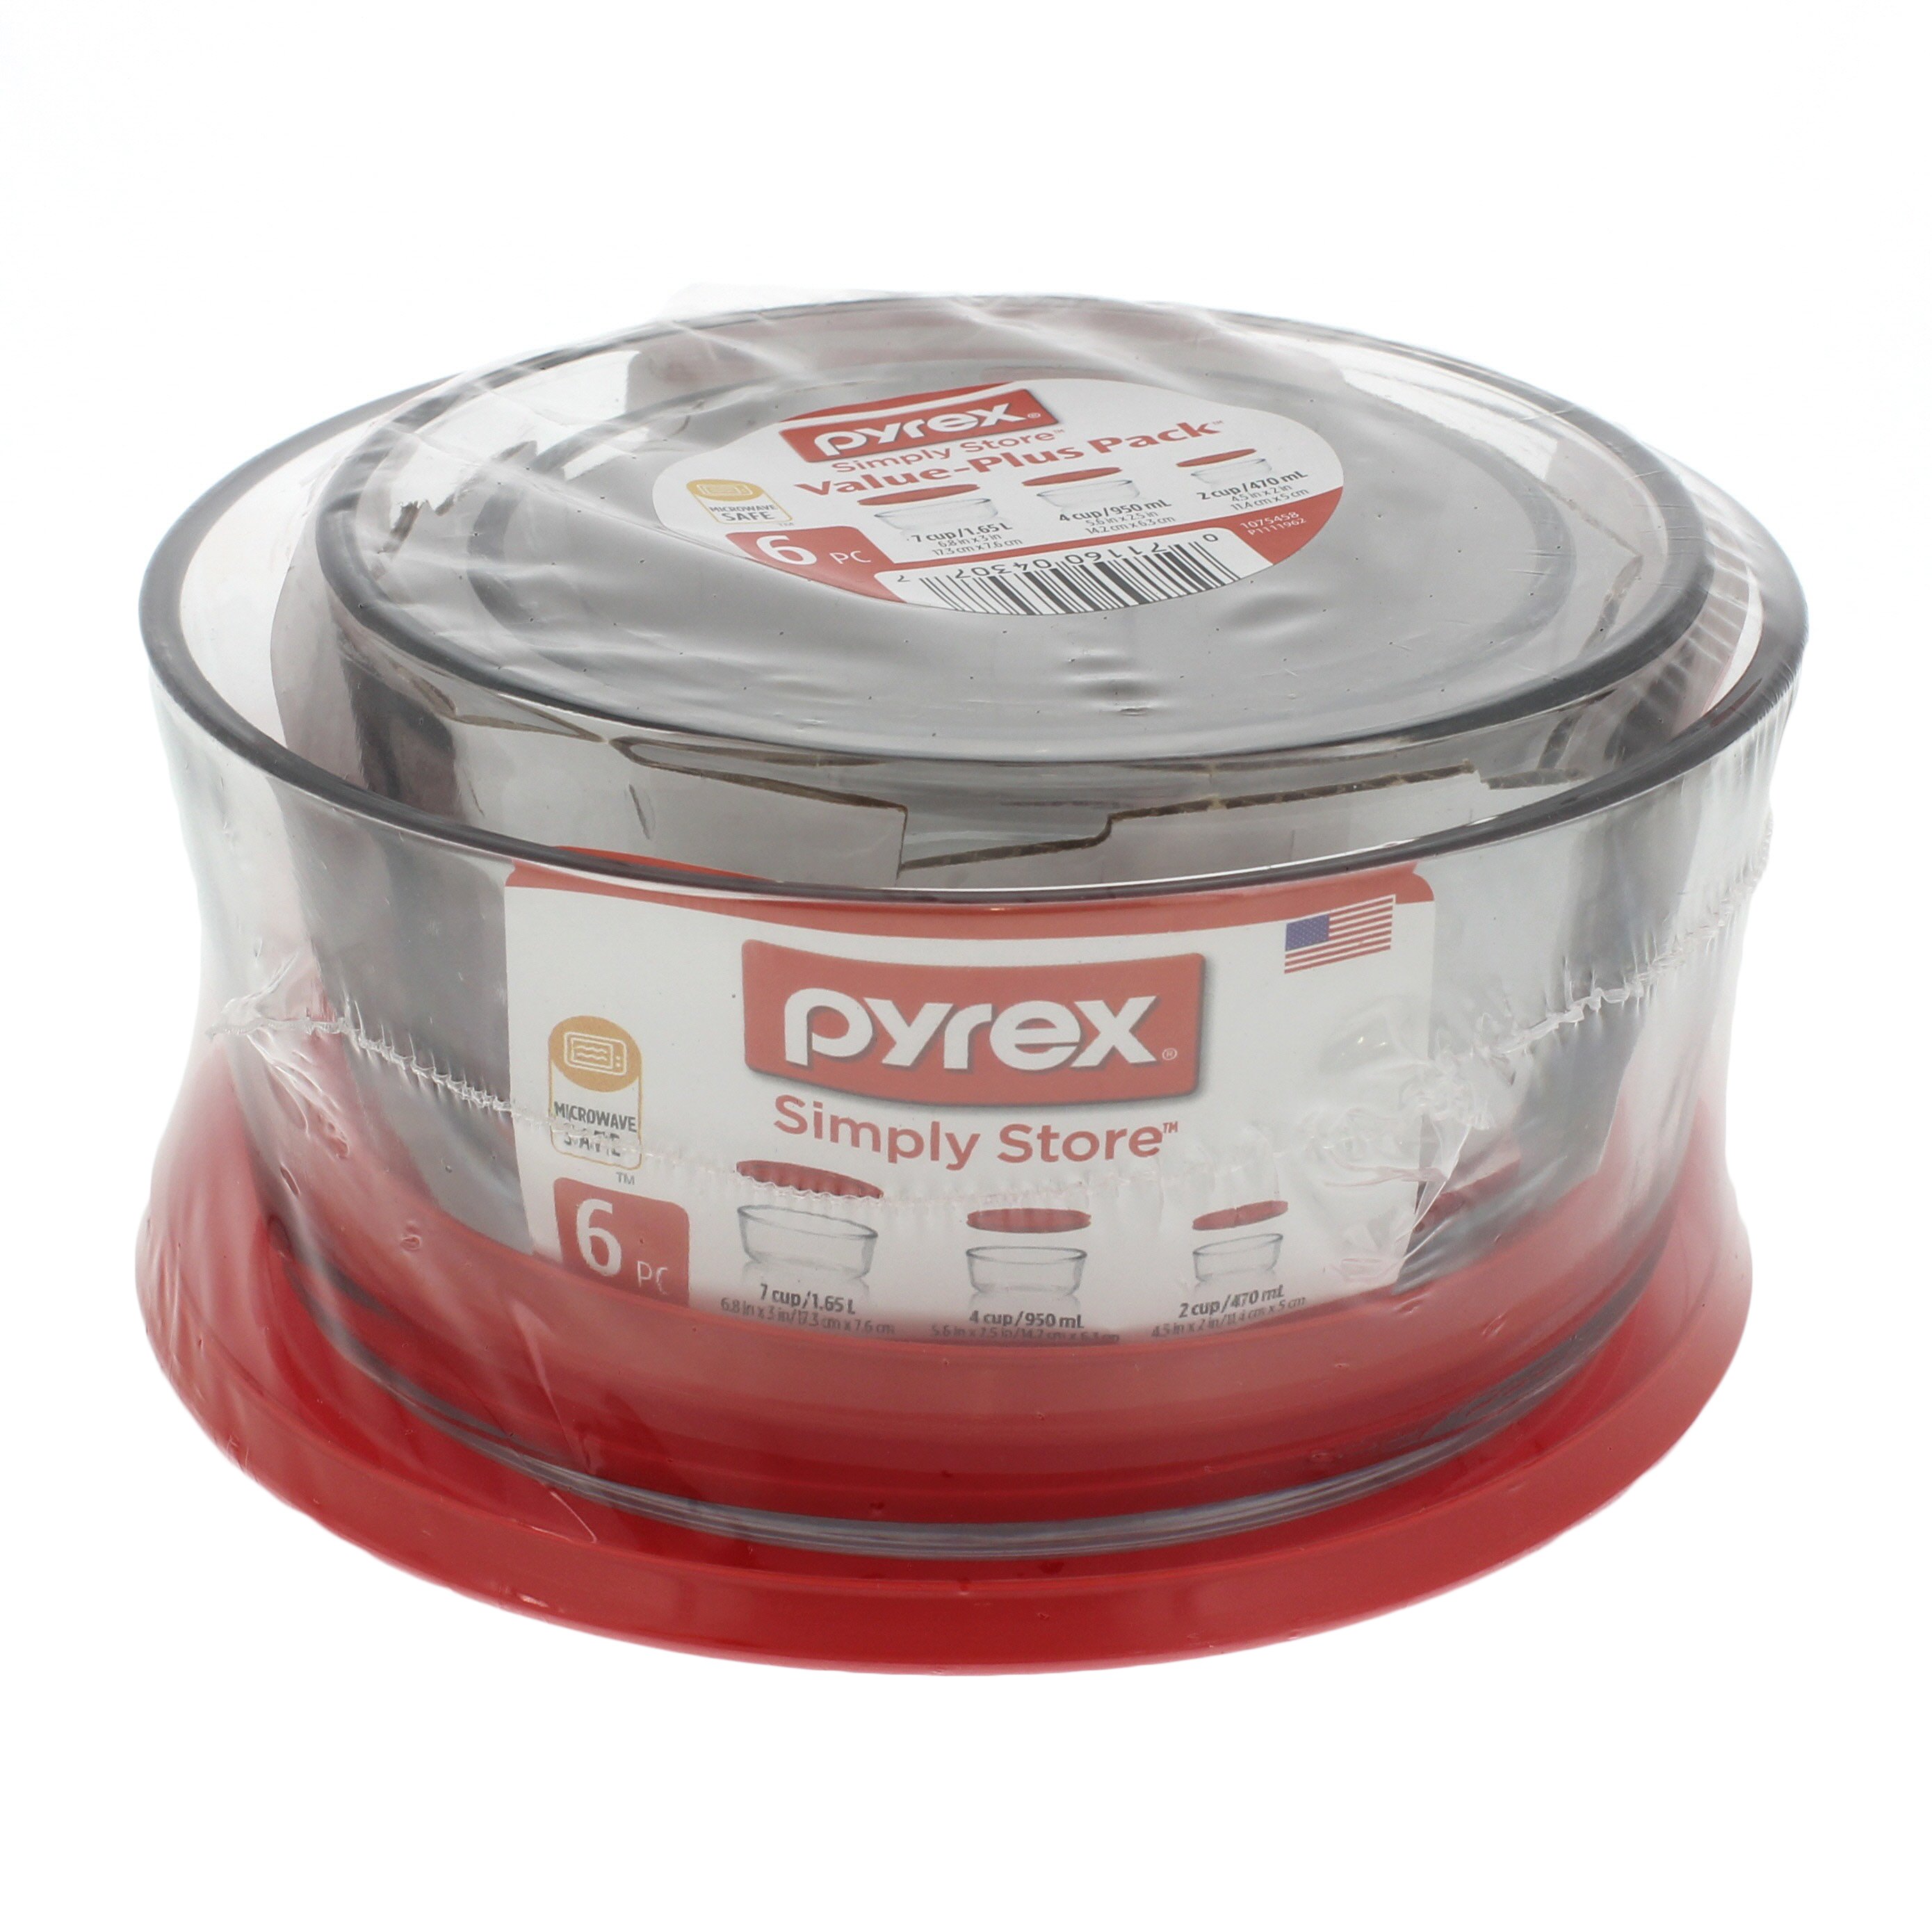 Pyrex Glass Storage, 7 Cup